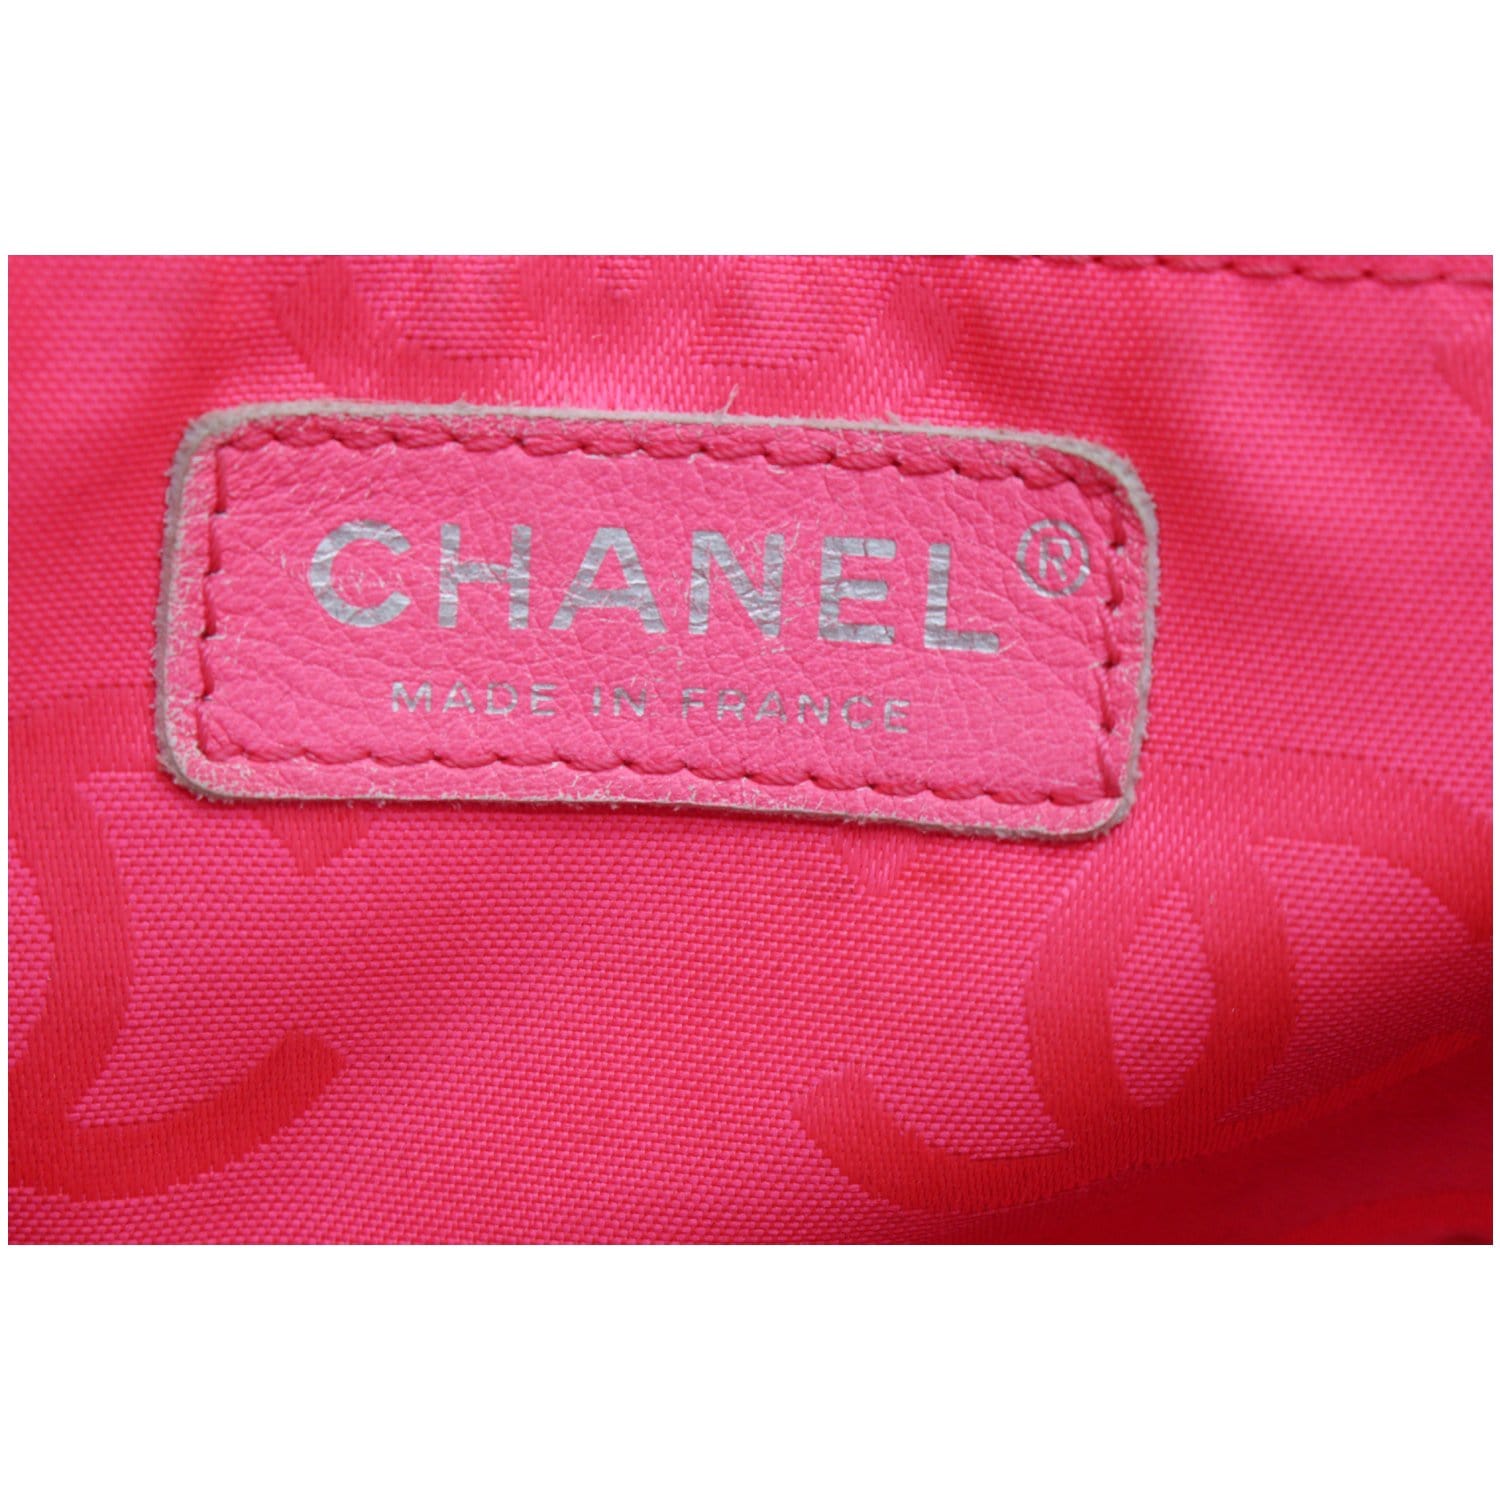 chanel pink handbags leather